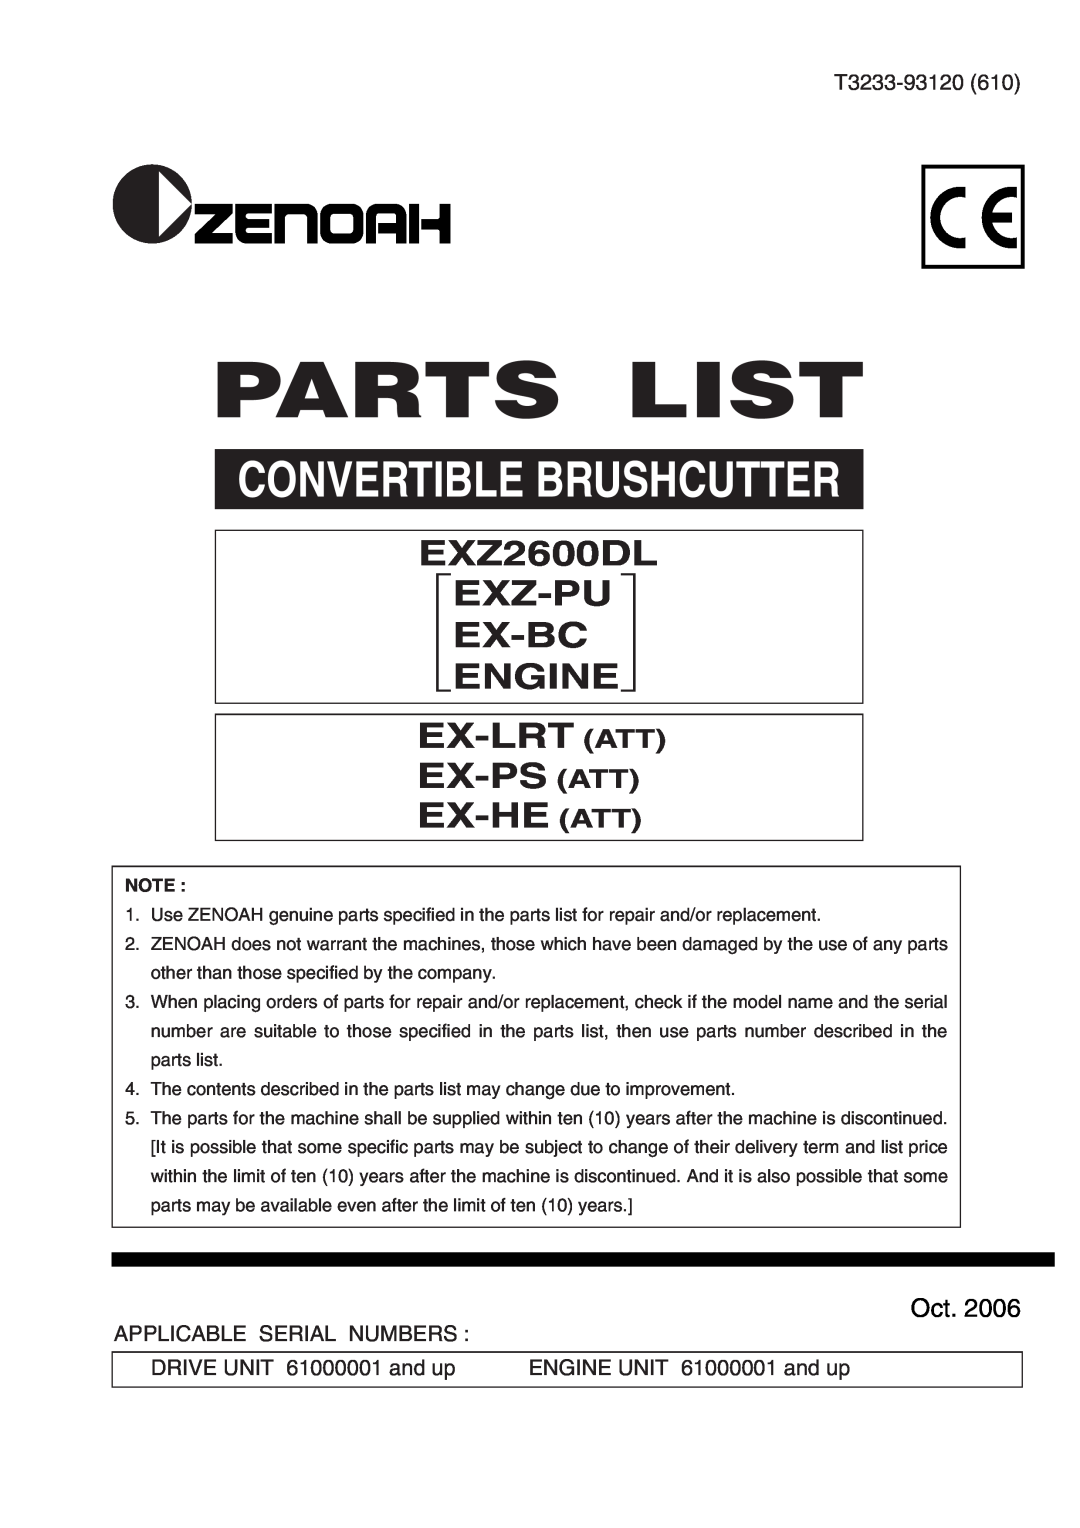 Zenoah EX-HE (ATT) manual Parts List, Convertible Brushcutter, EXZ2600DL EXZ-PU ,  Ex-Bc   Engine, Oct 